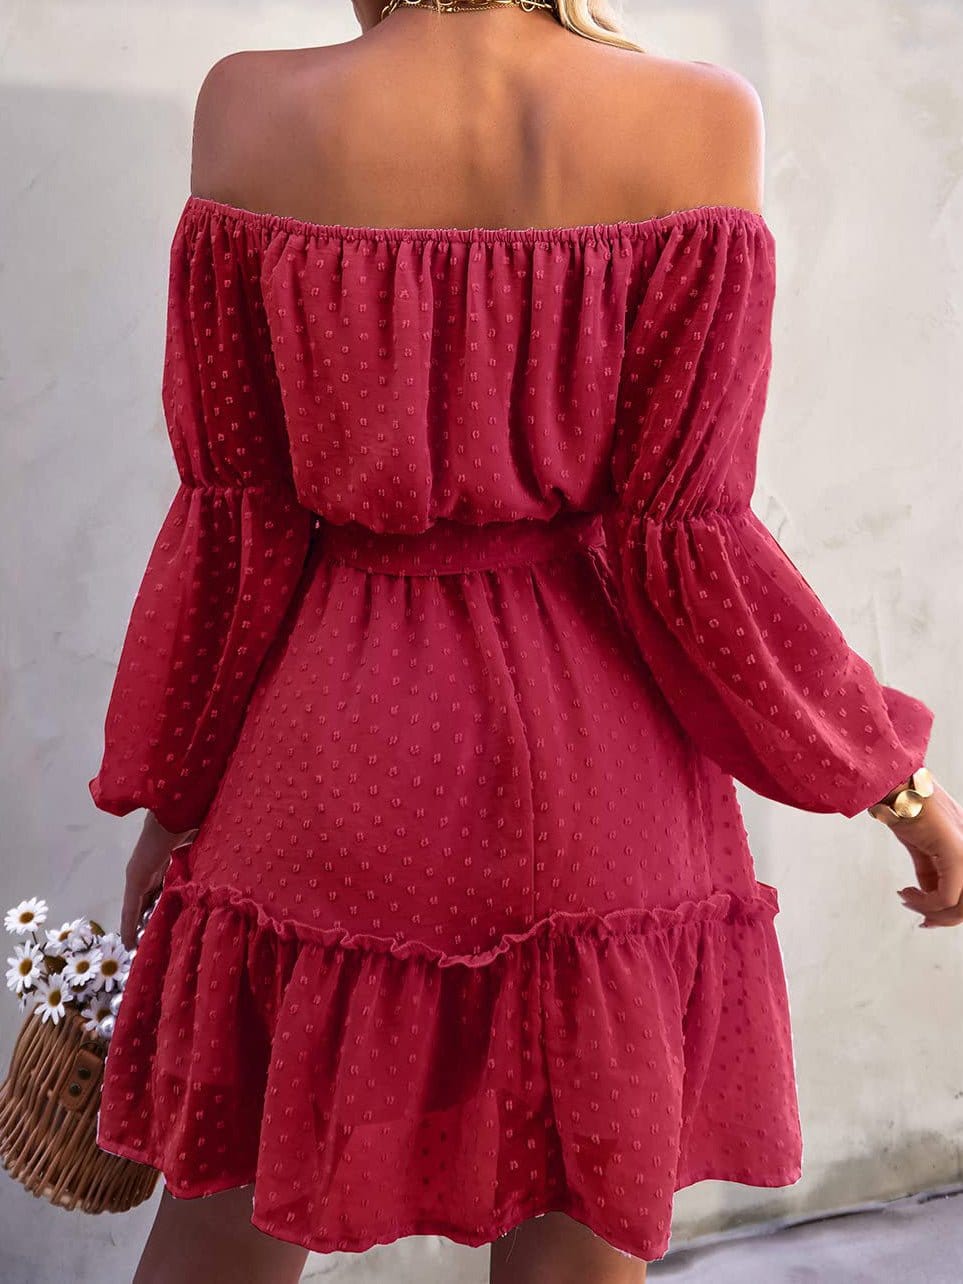 MsDressly Mini Dresses One-Shoulder Jacquard Long-Sleeve Dress